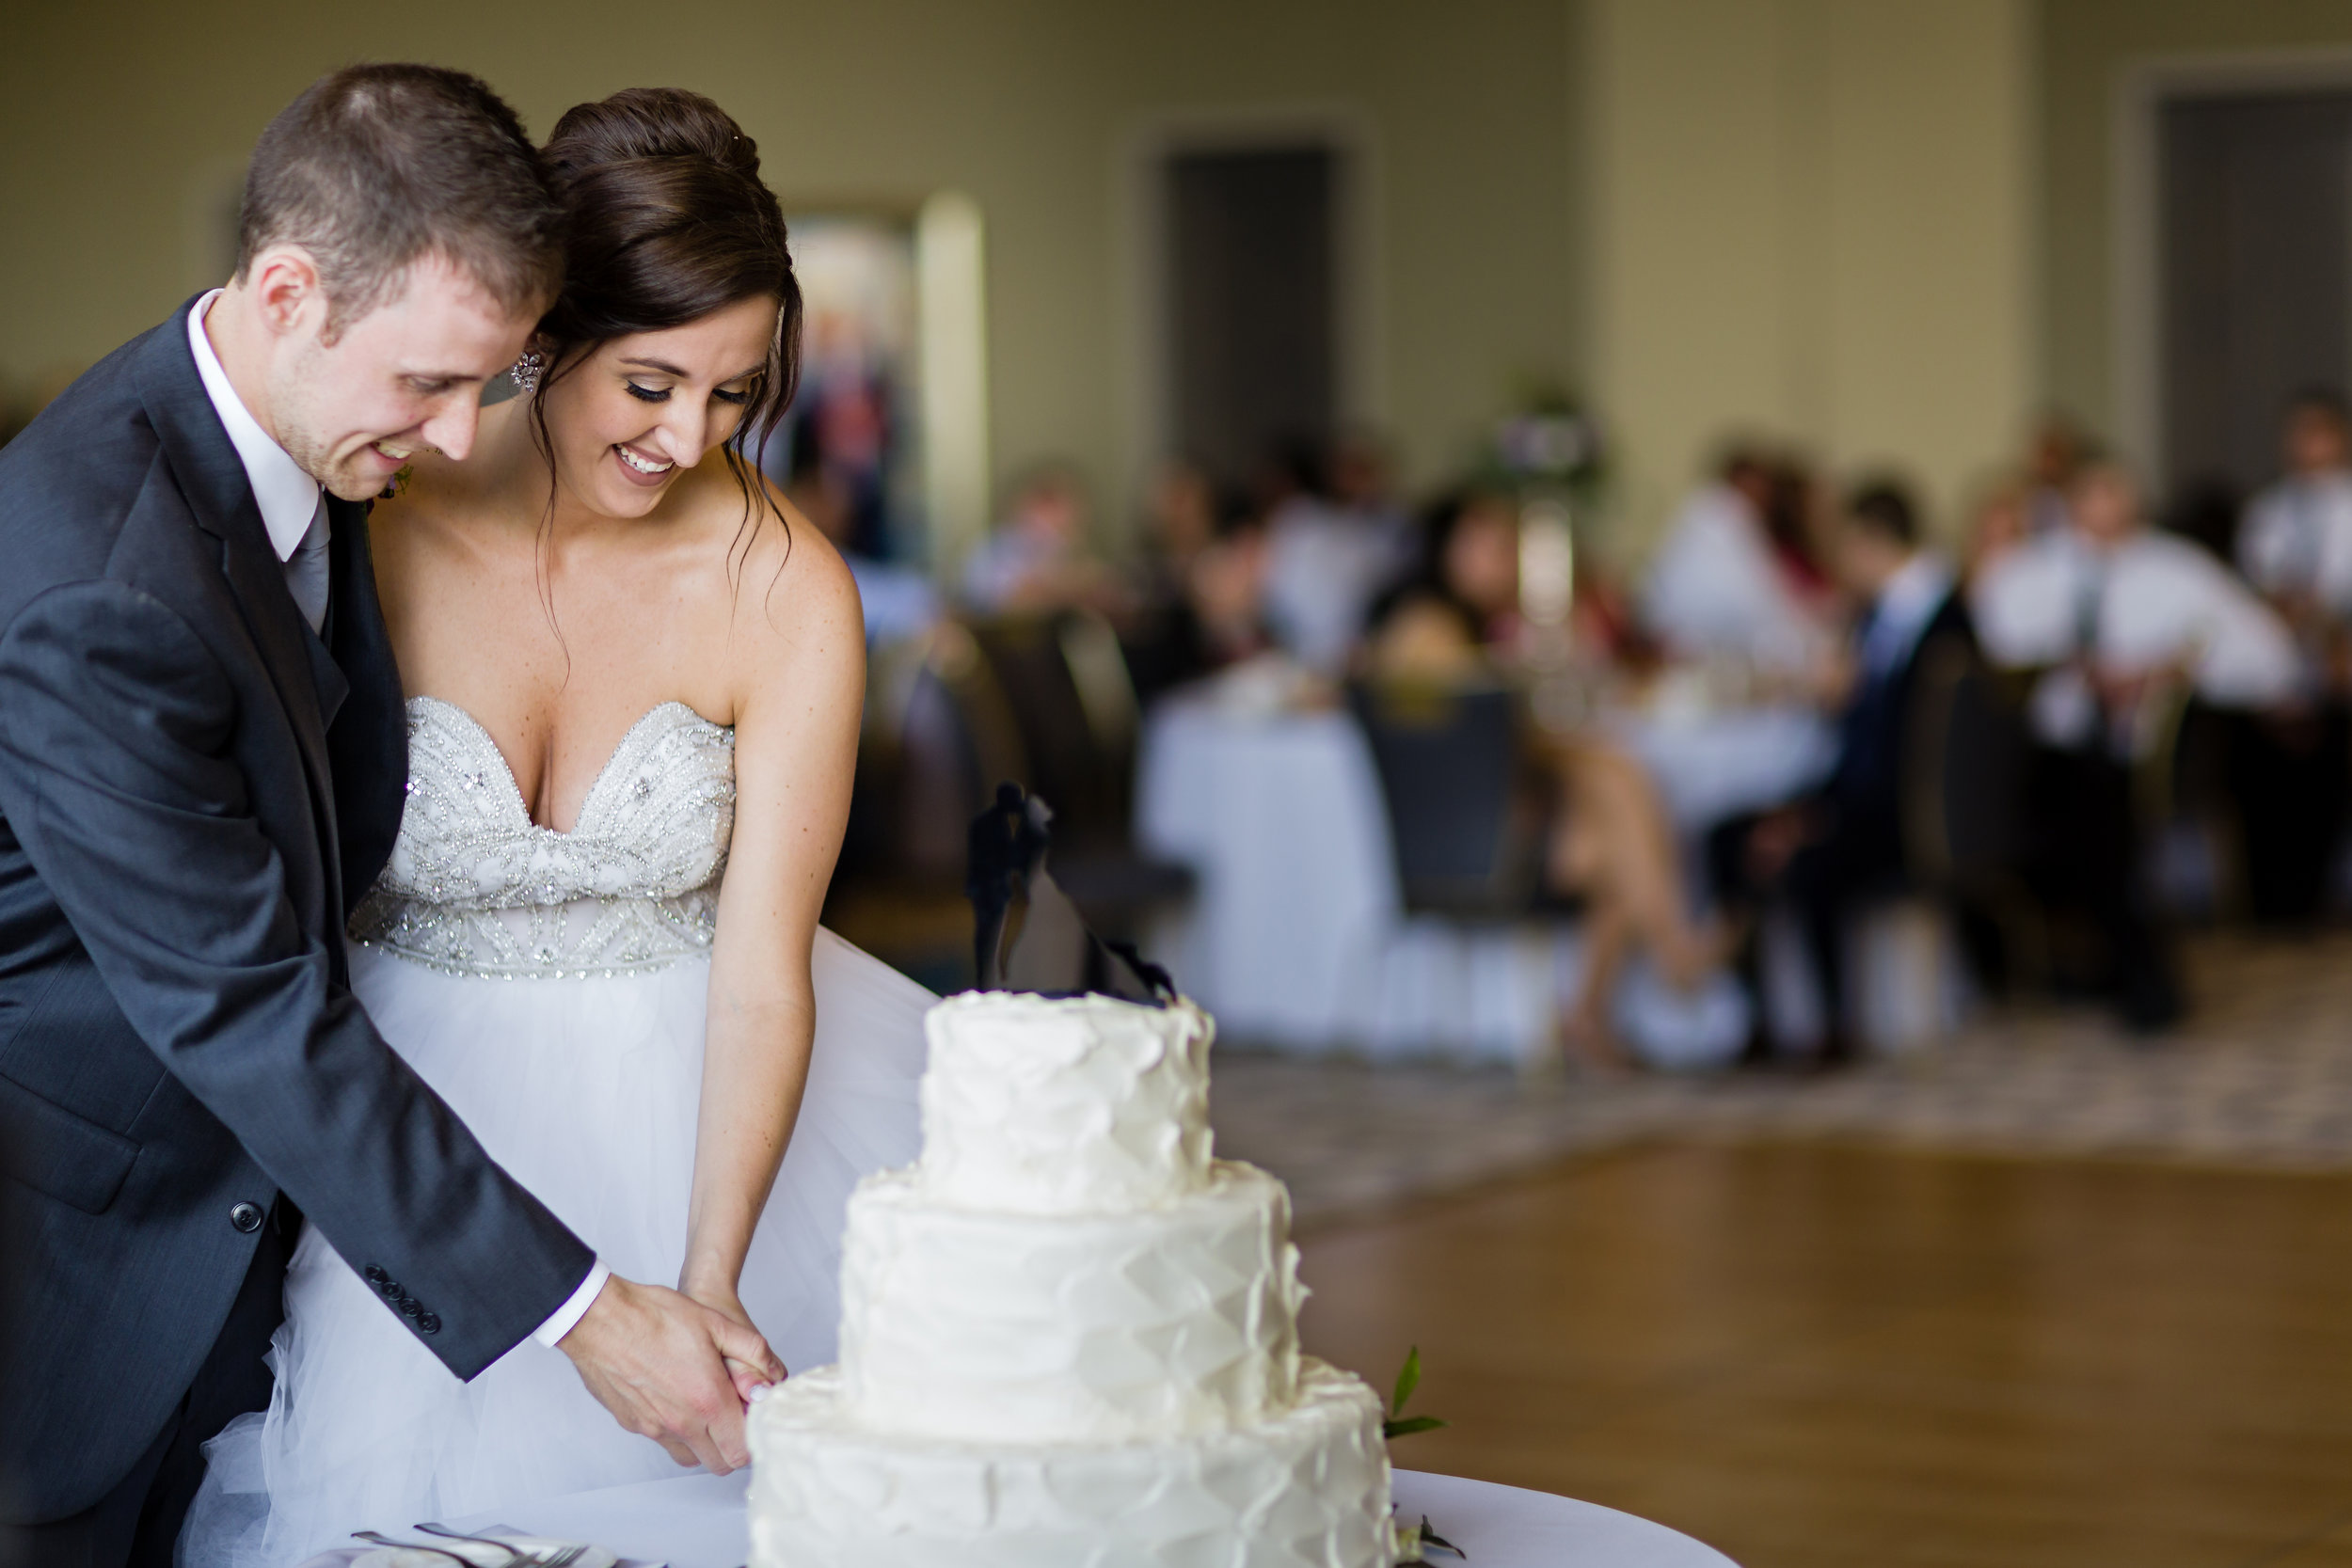 All White Wedding Cake - Pittsburgh Wedding Venue - Duquesne University Wedding